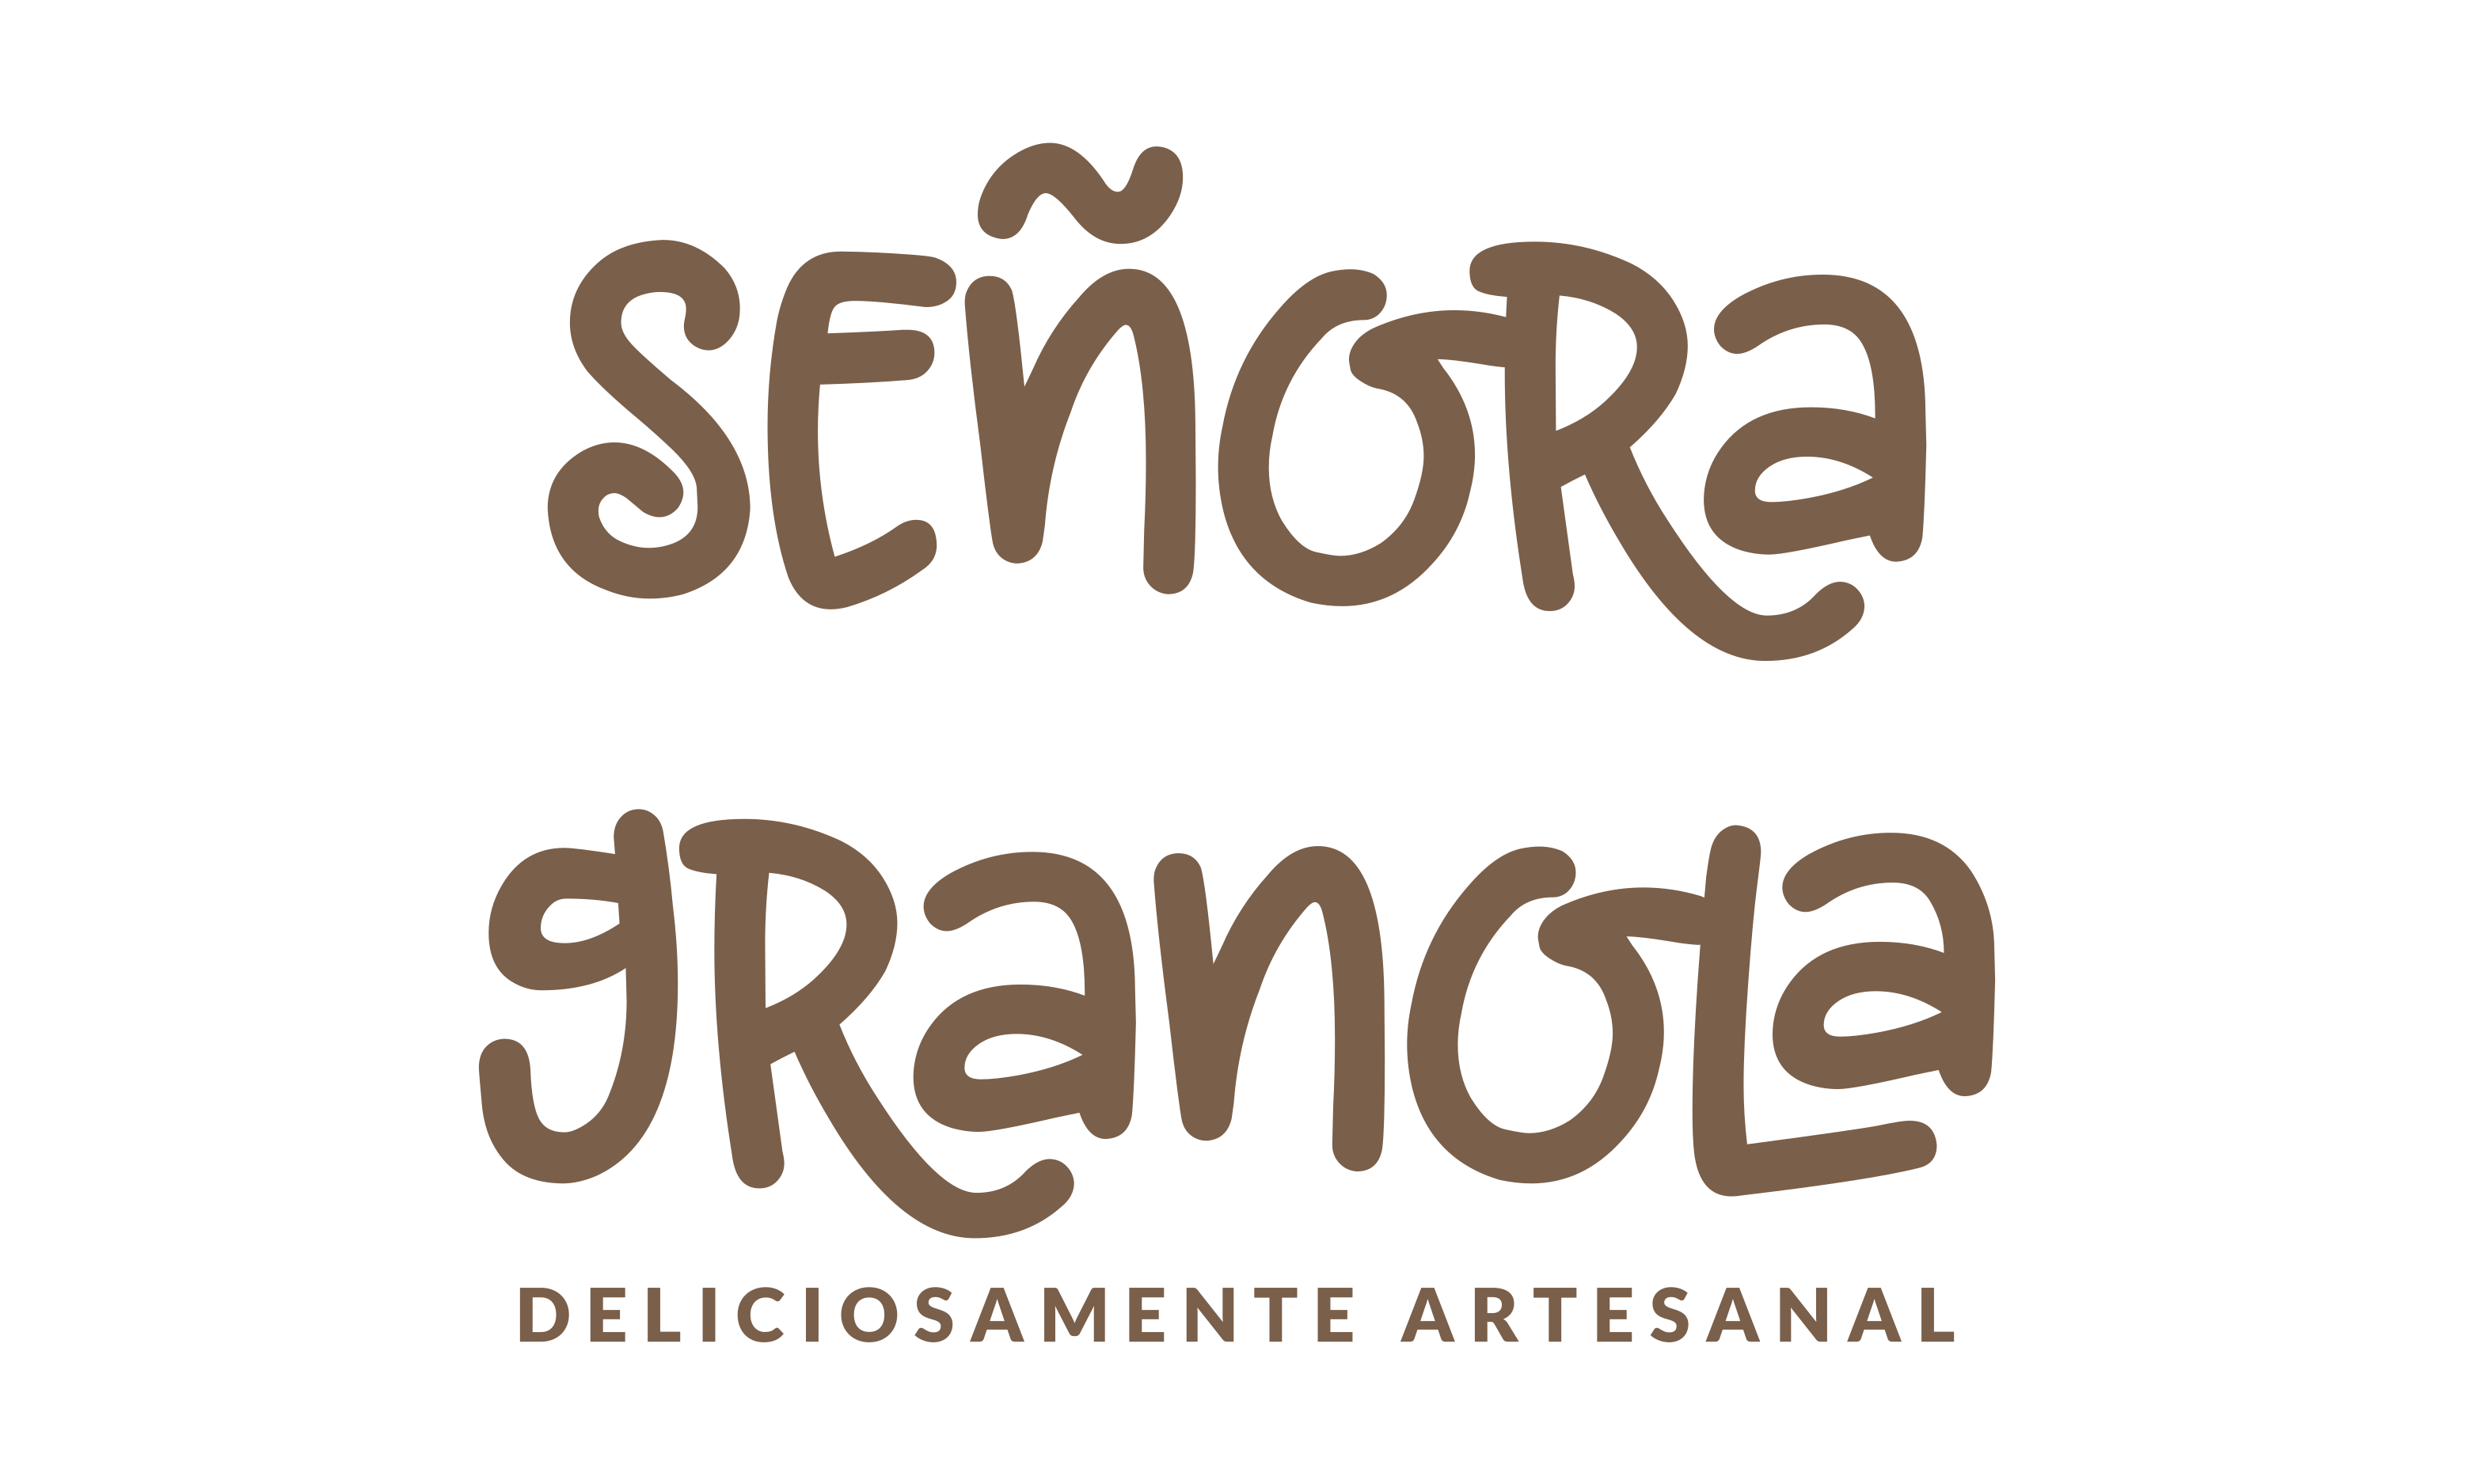 Senora Granola